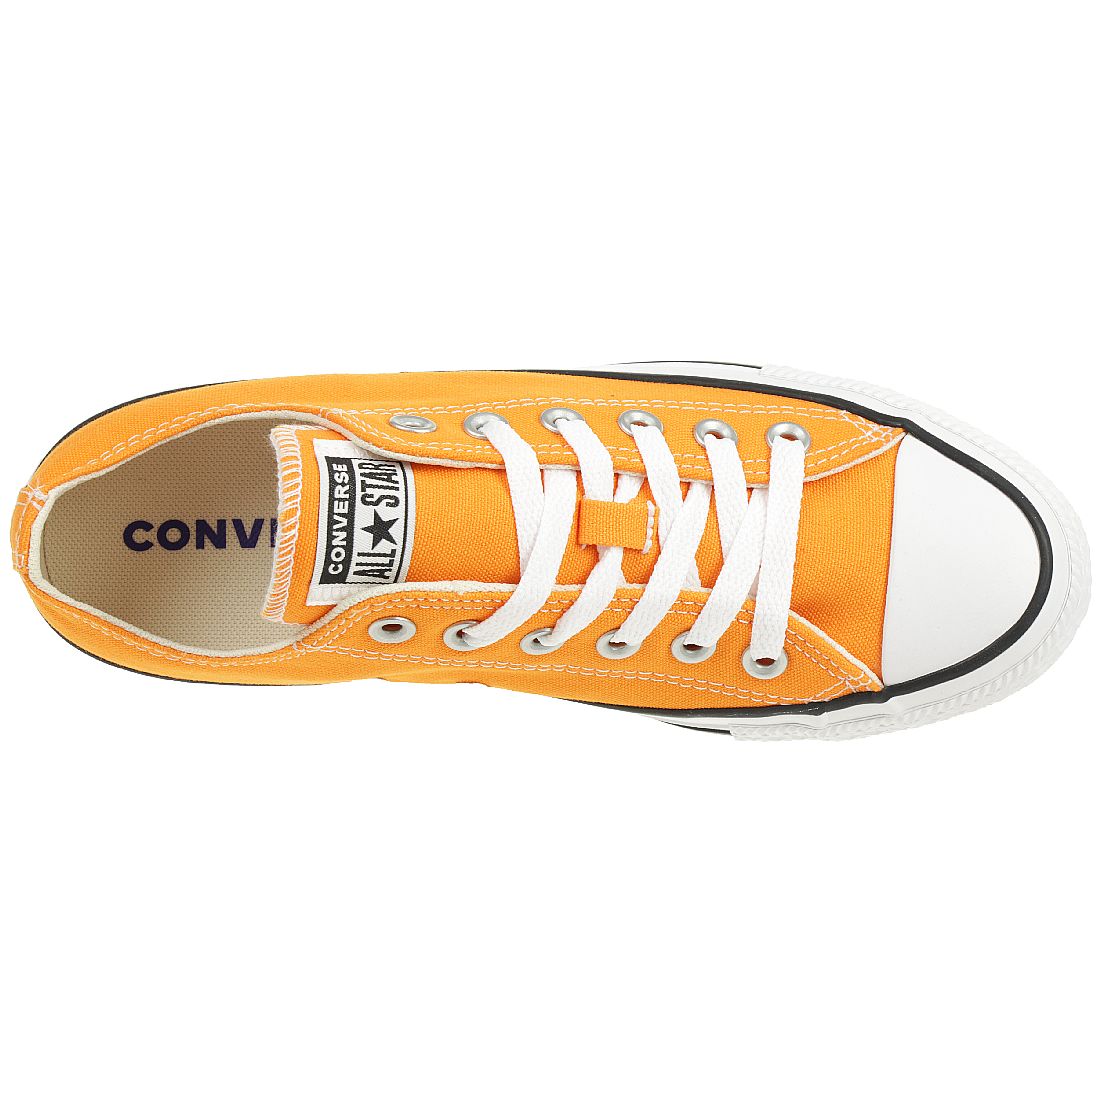 Converse CTAS OX Chuck Schuhe Textil Sneaker Orange Rind 164937C